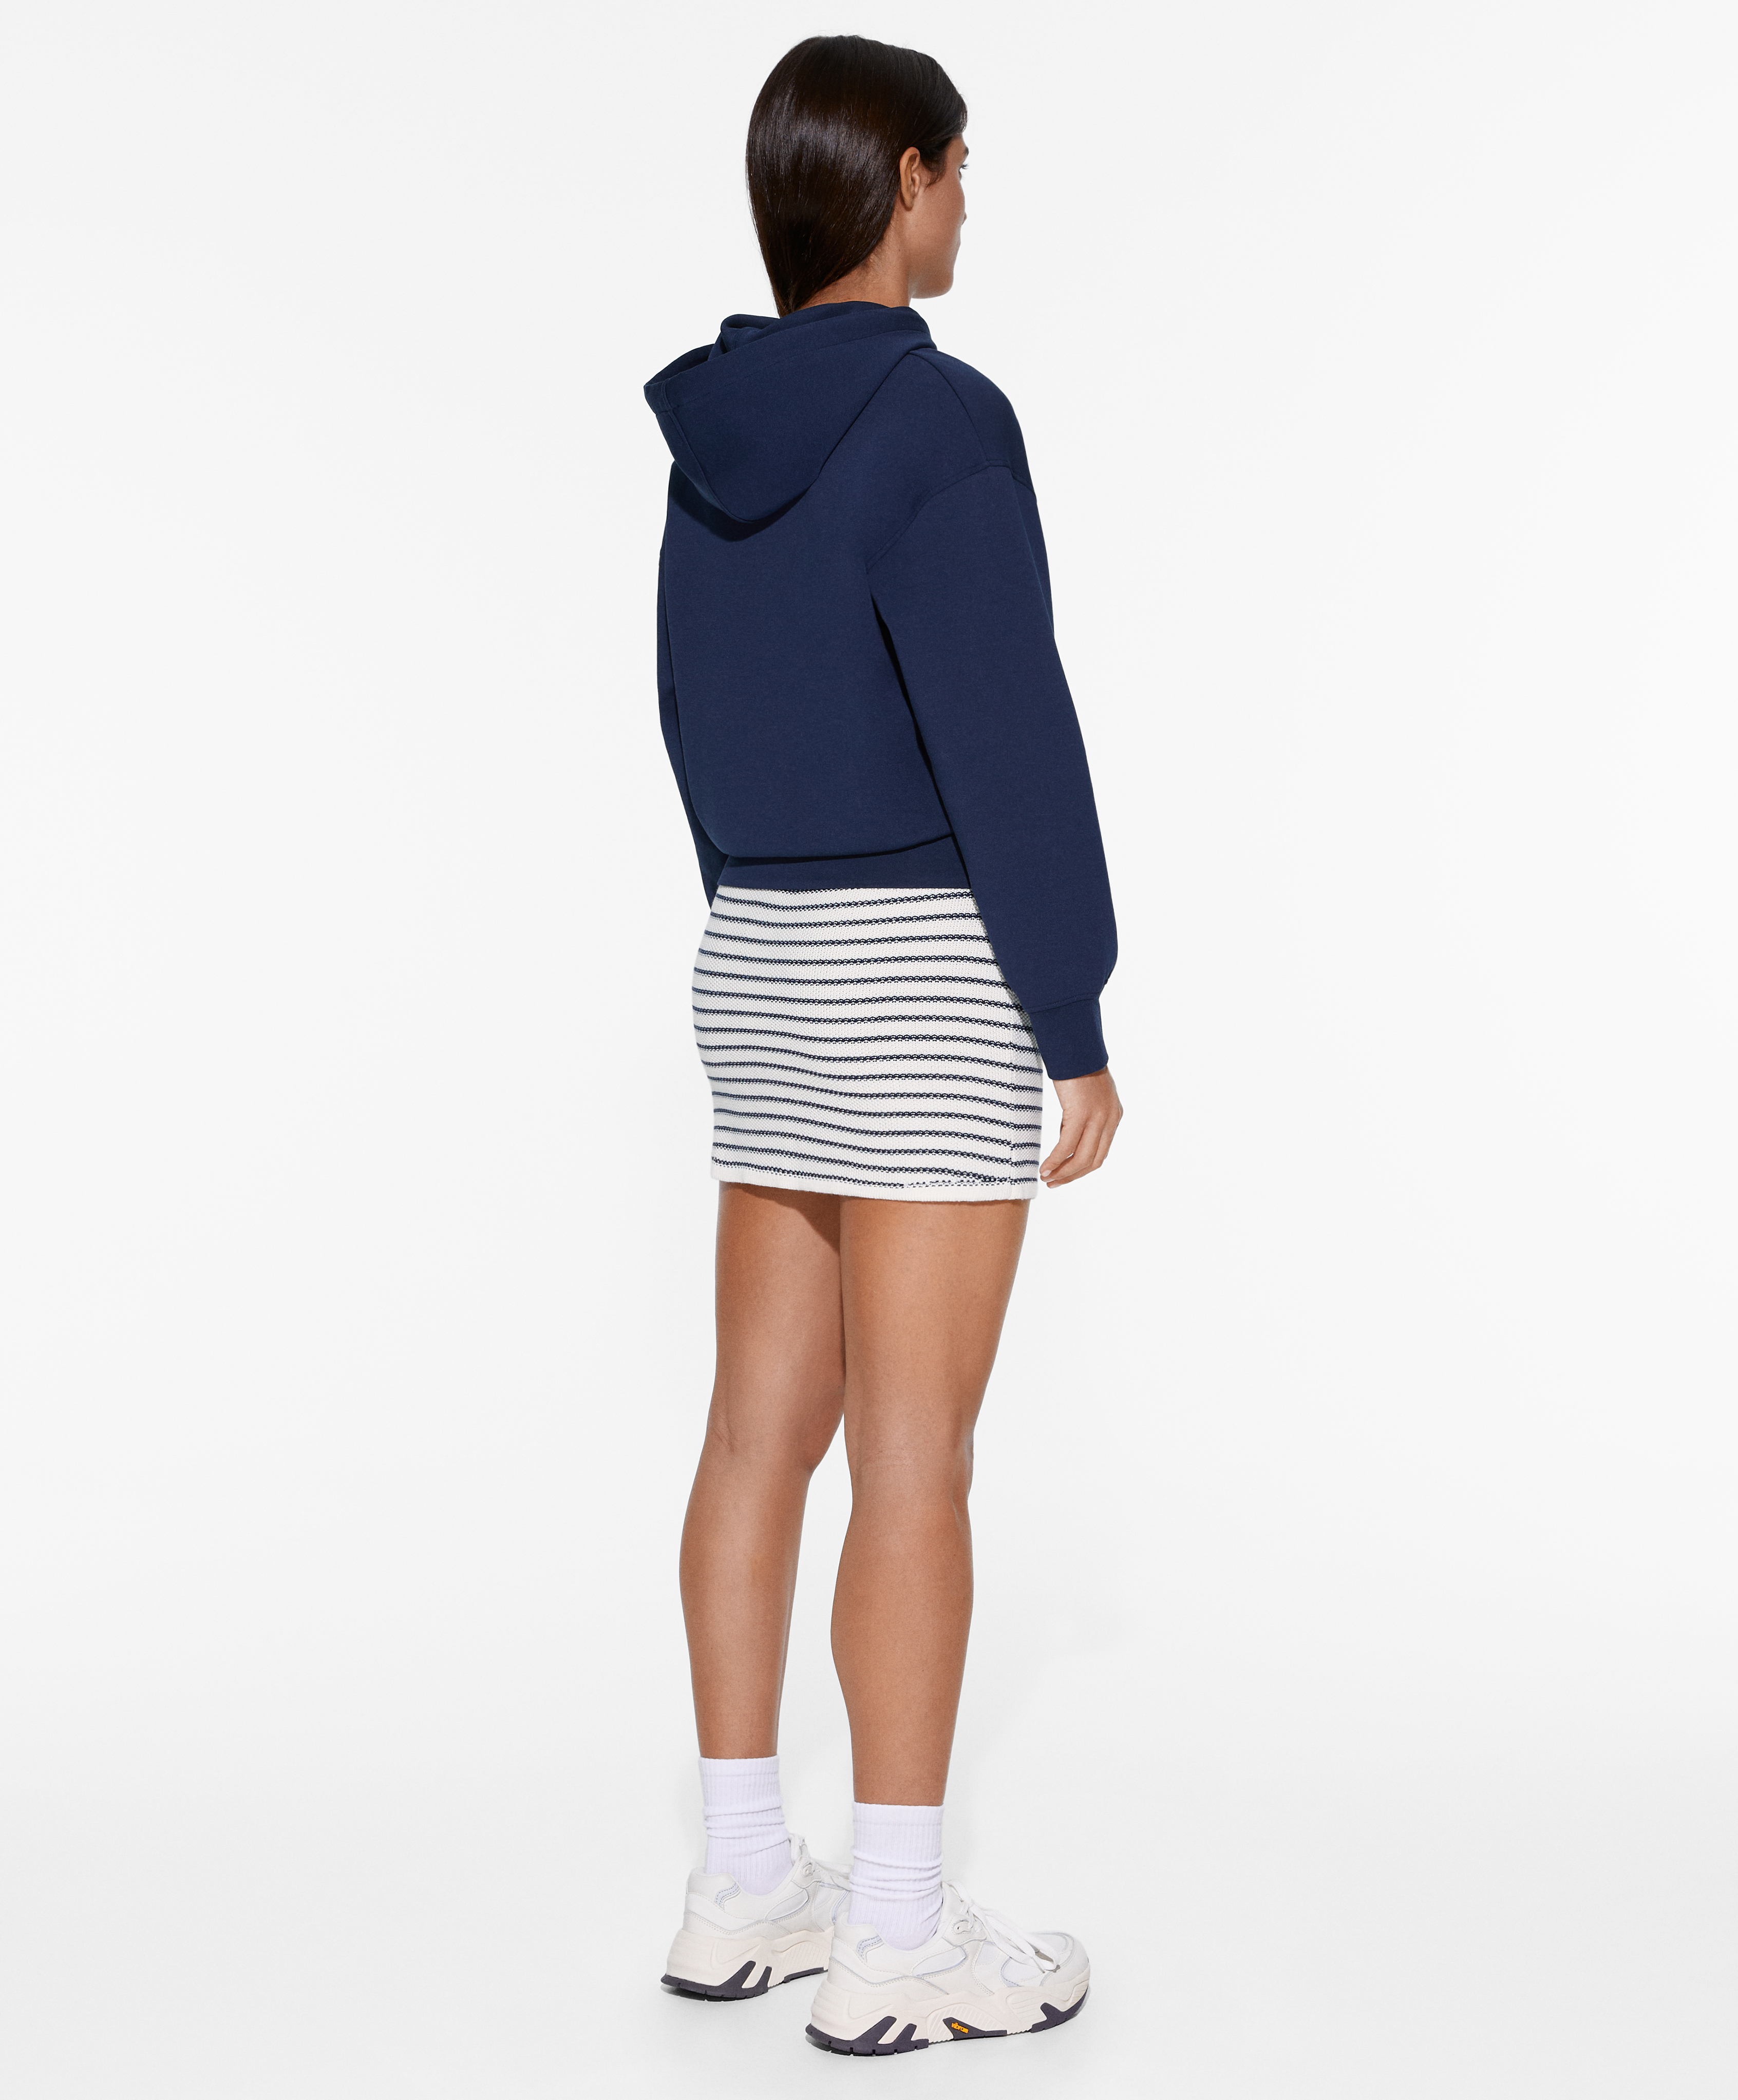 Pearl-knit short skirt